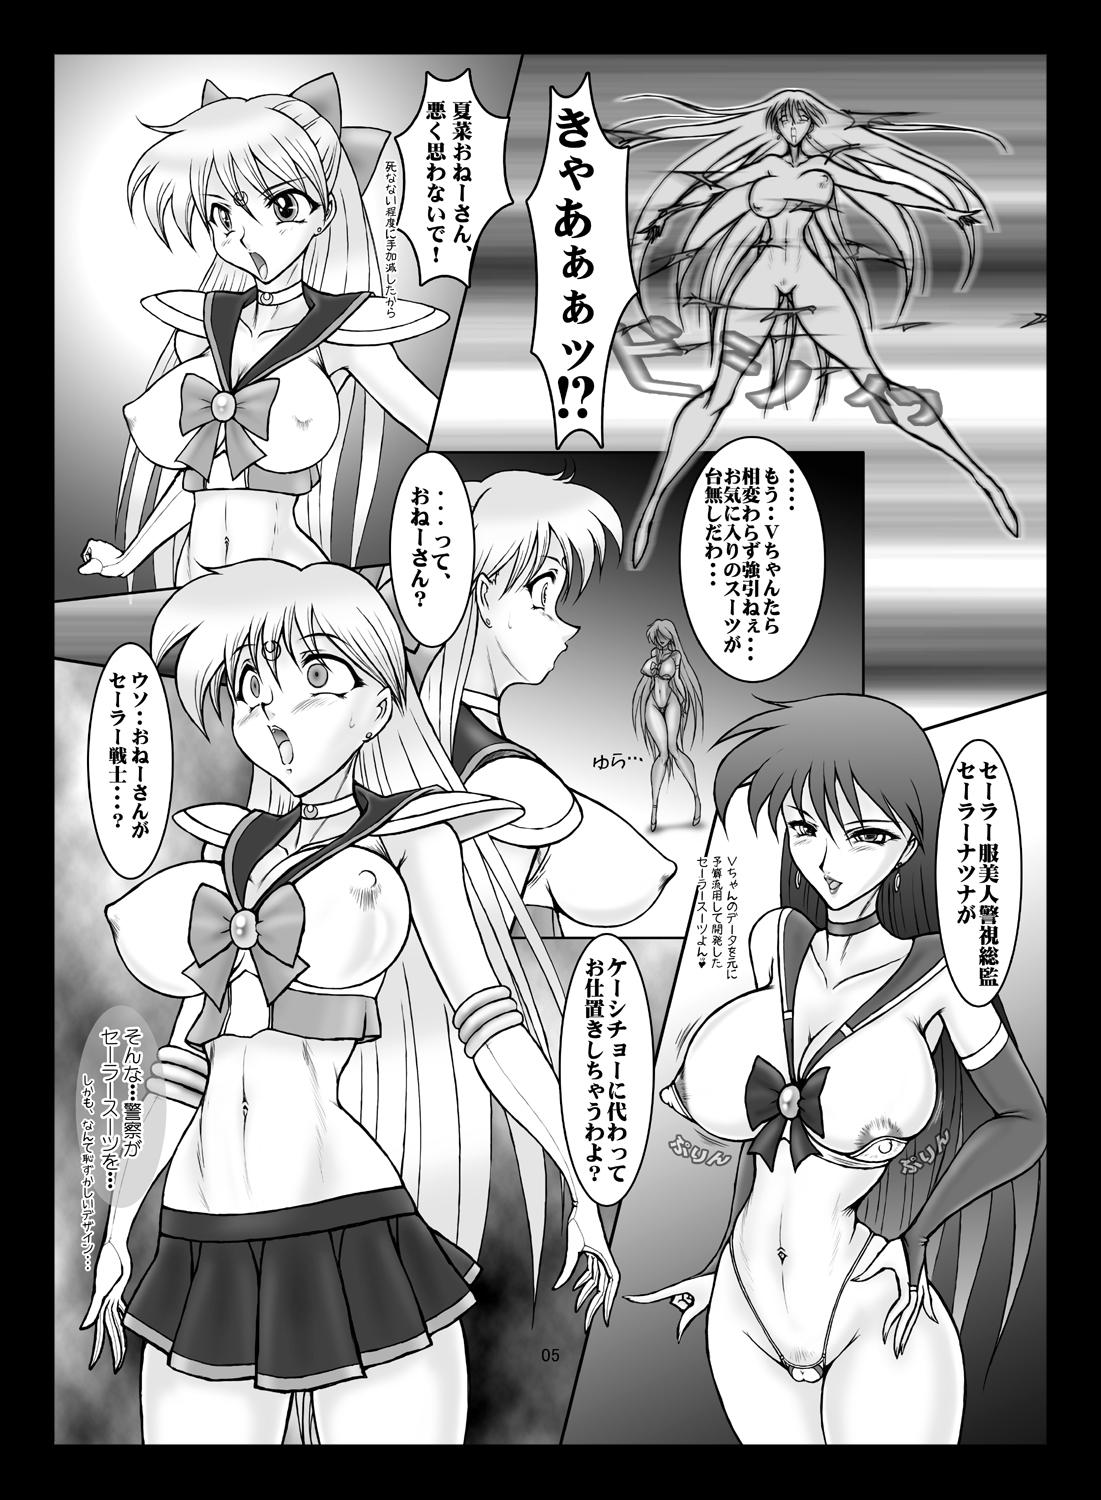 Puto V for Sailor V - Sailor moon 18 Porn - Page 4